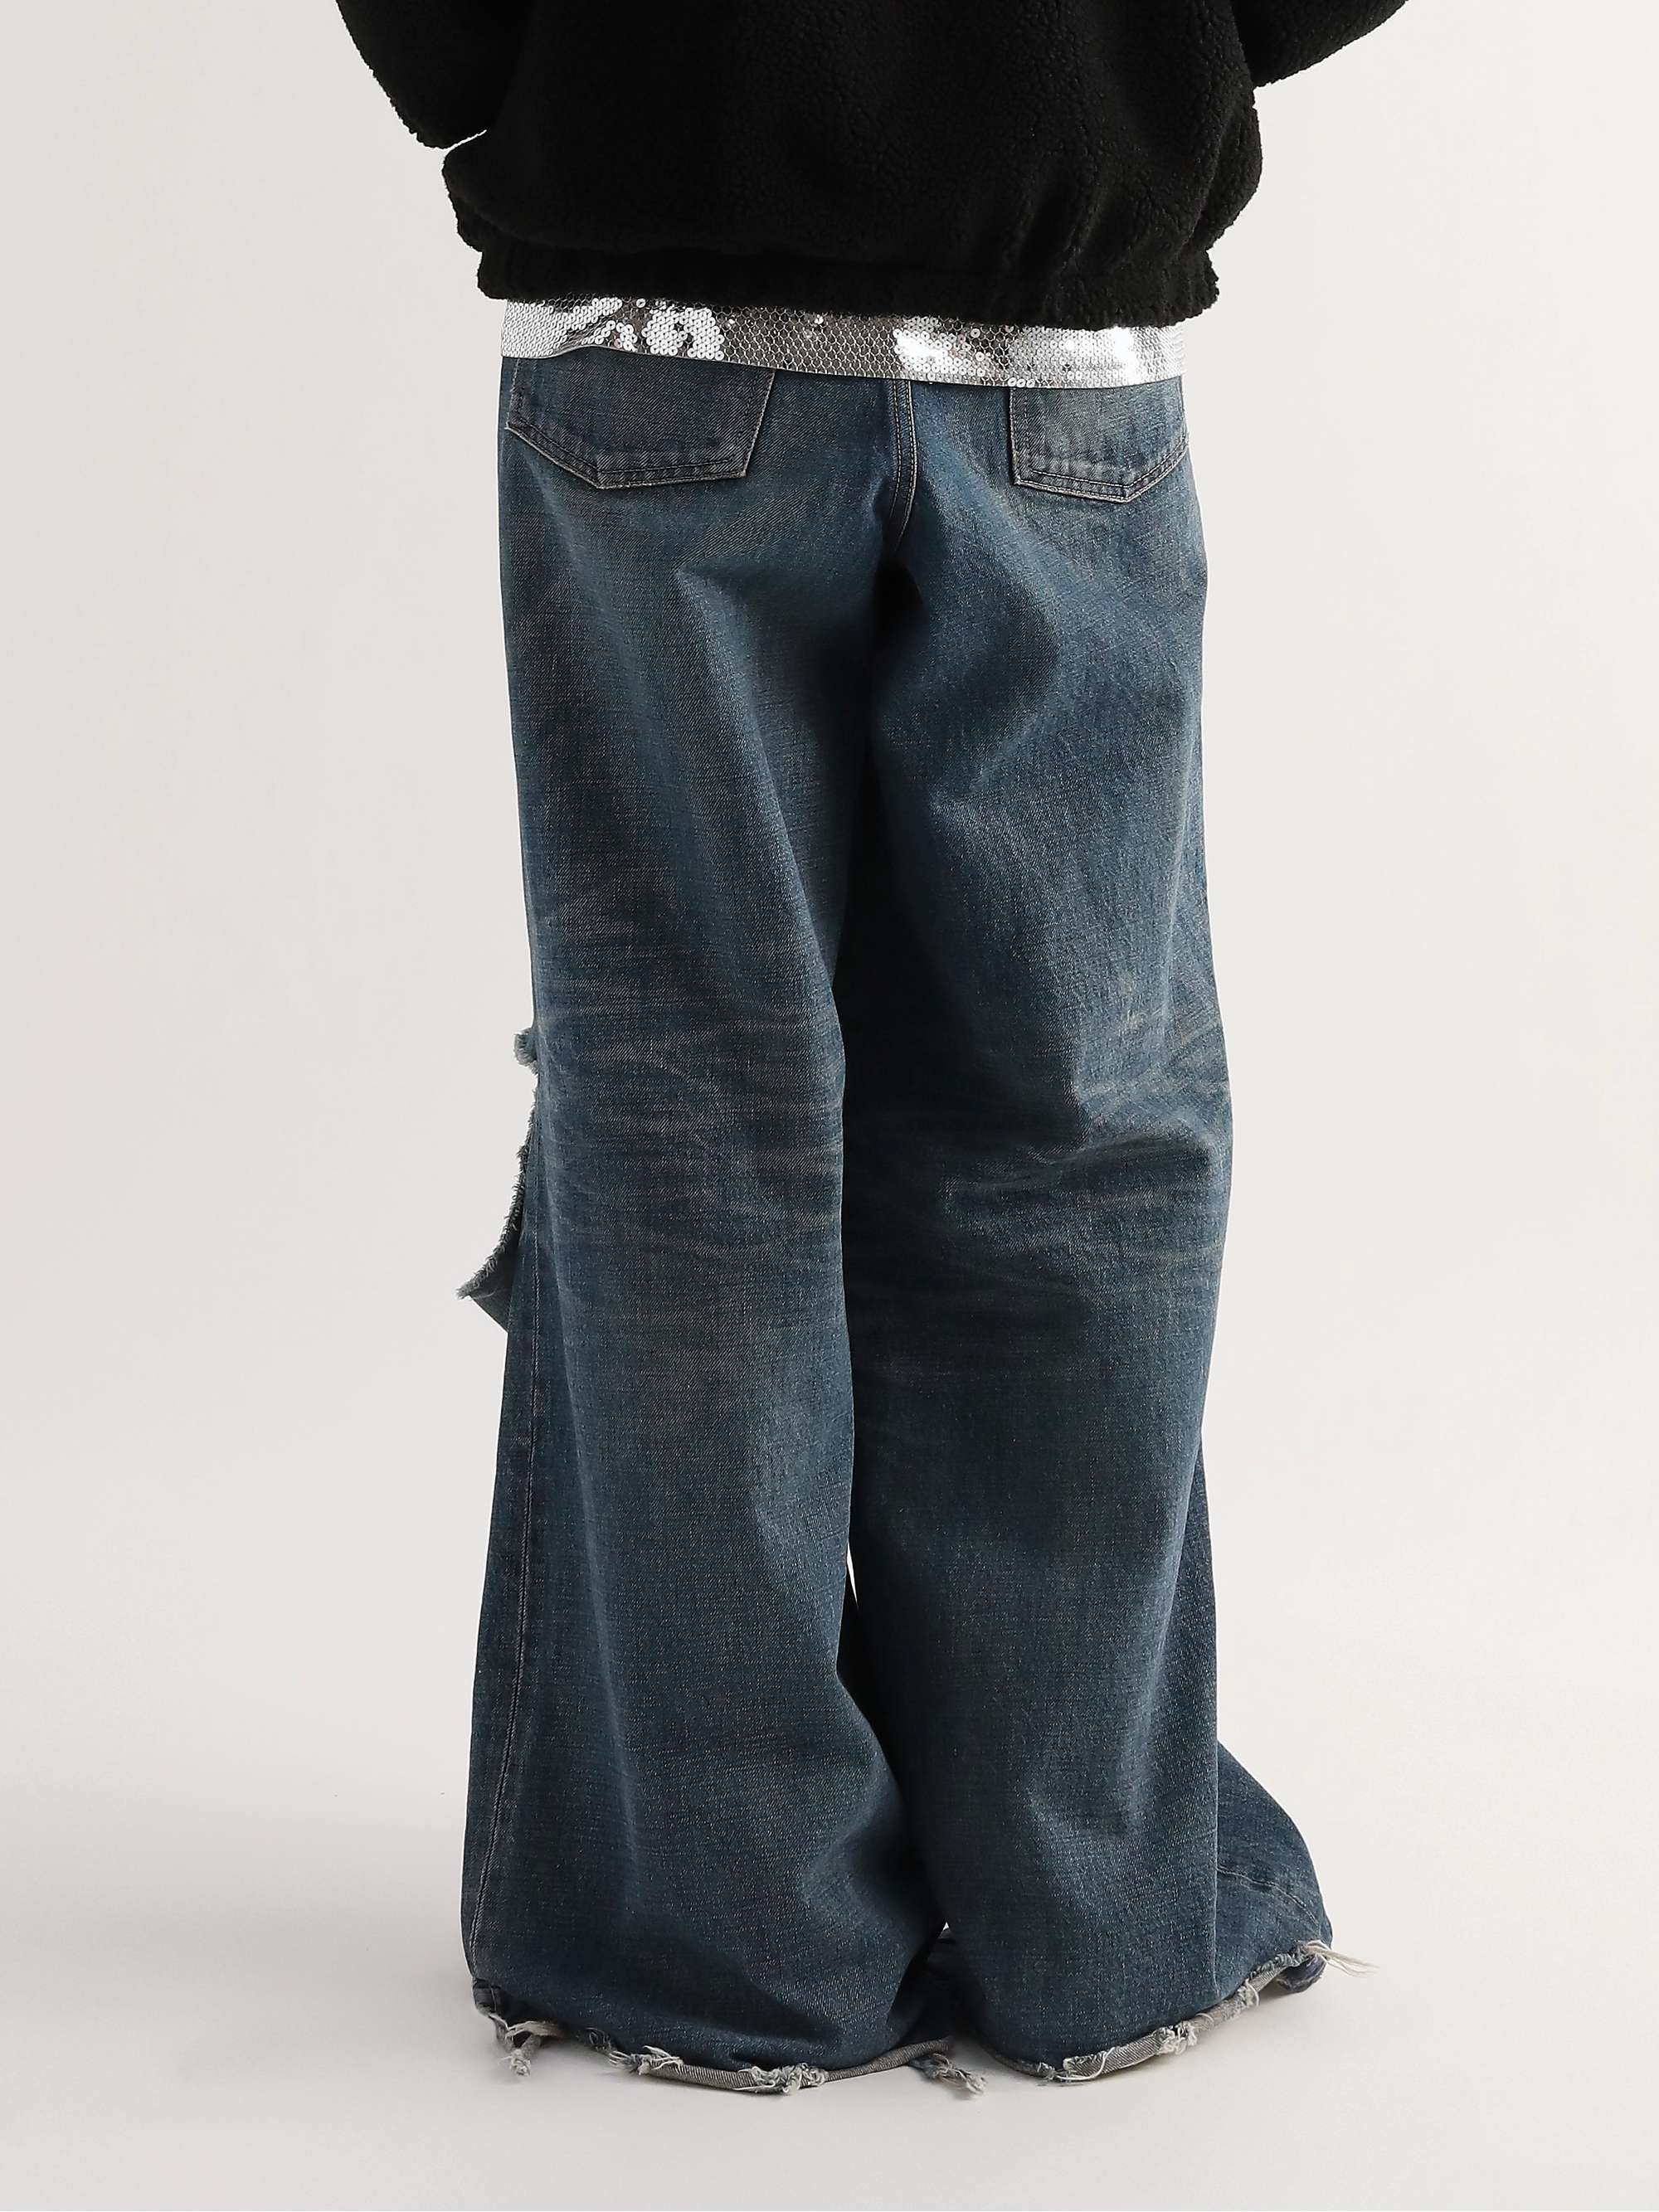 CELINE HOMME Wide-Leg Printed Distressed Jeans